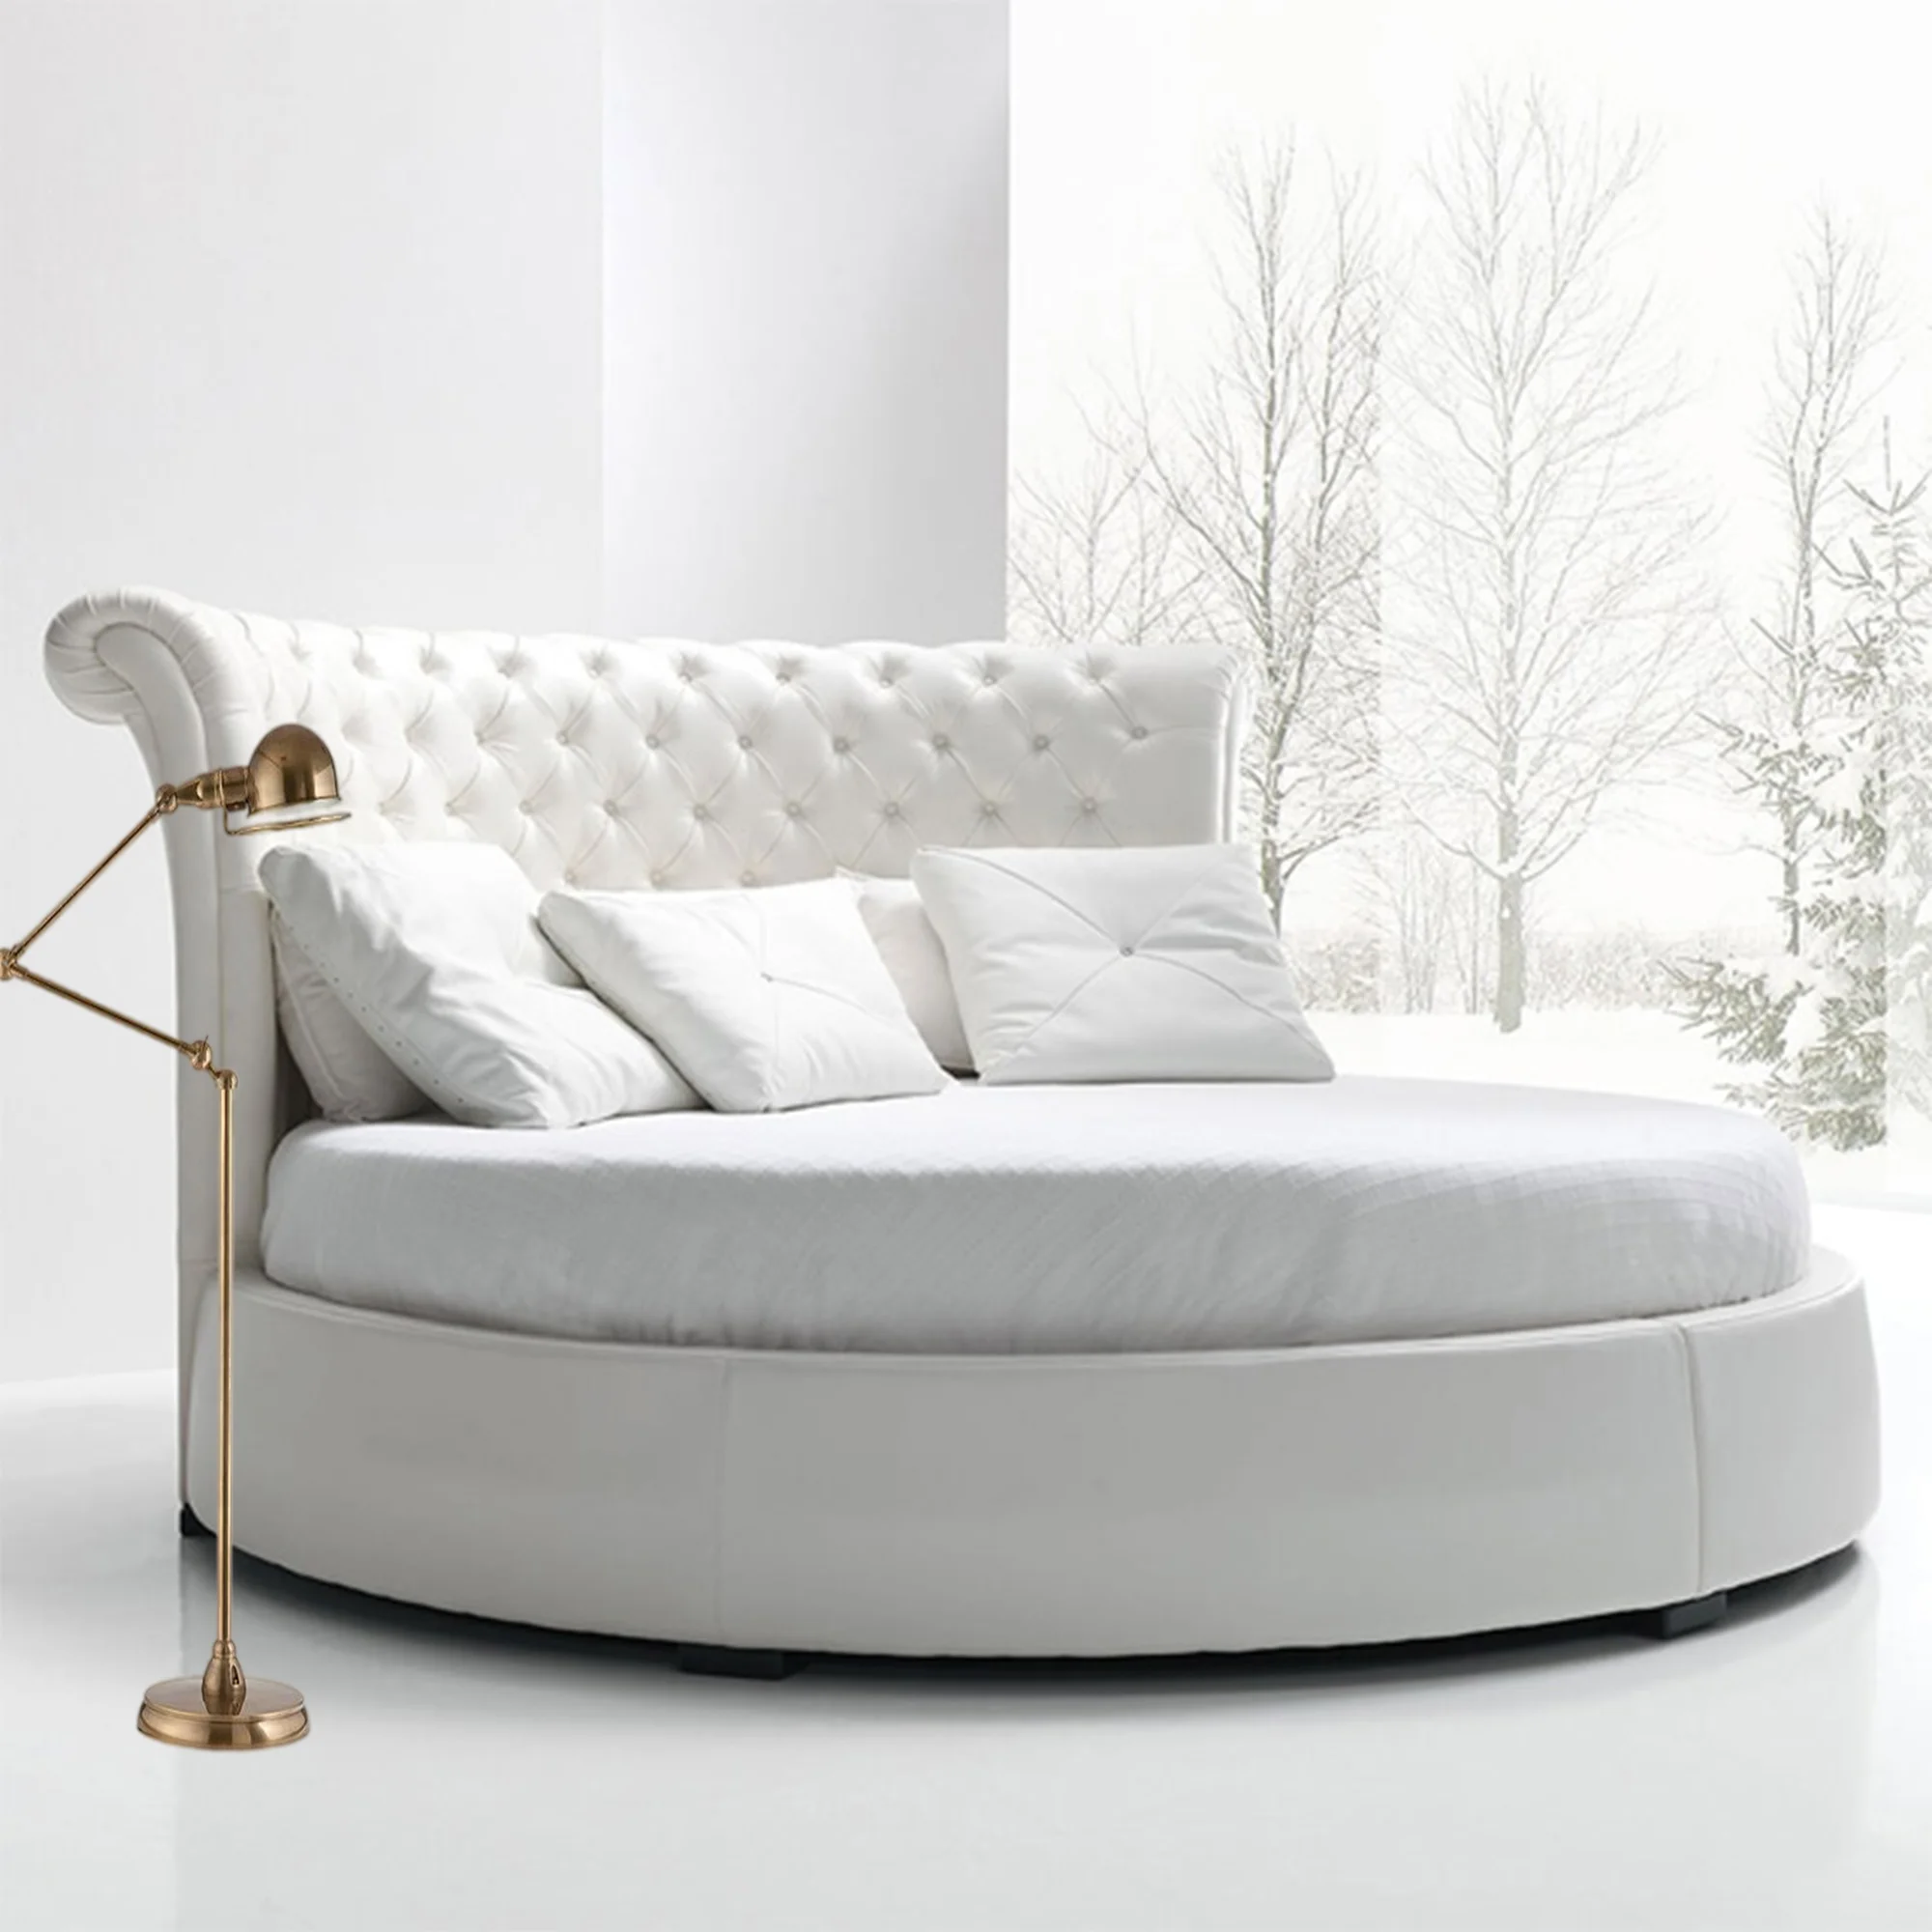 Cheap Pillow Top King Sizes Round Beds Mattresses Memory Foam Double Bed Sleeping Bonnell Spring Mattress